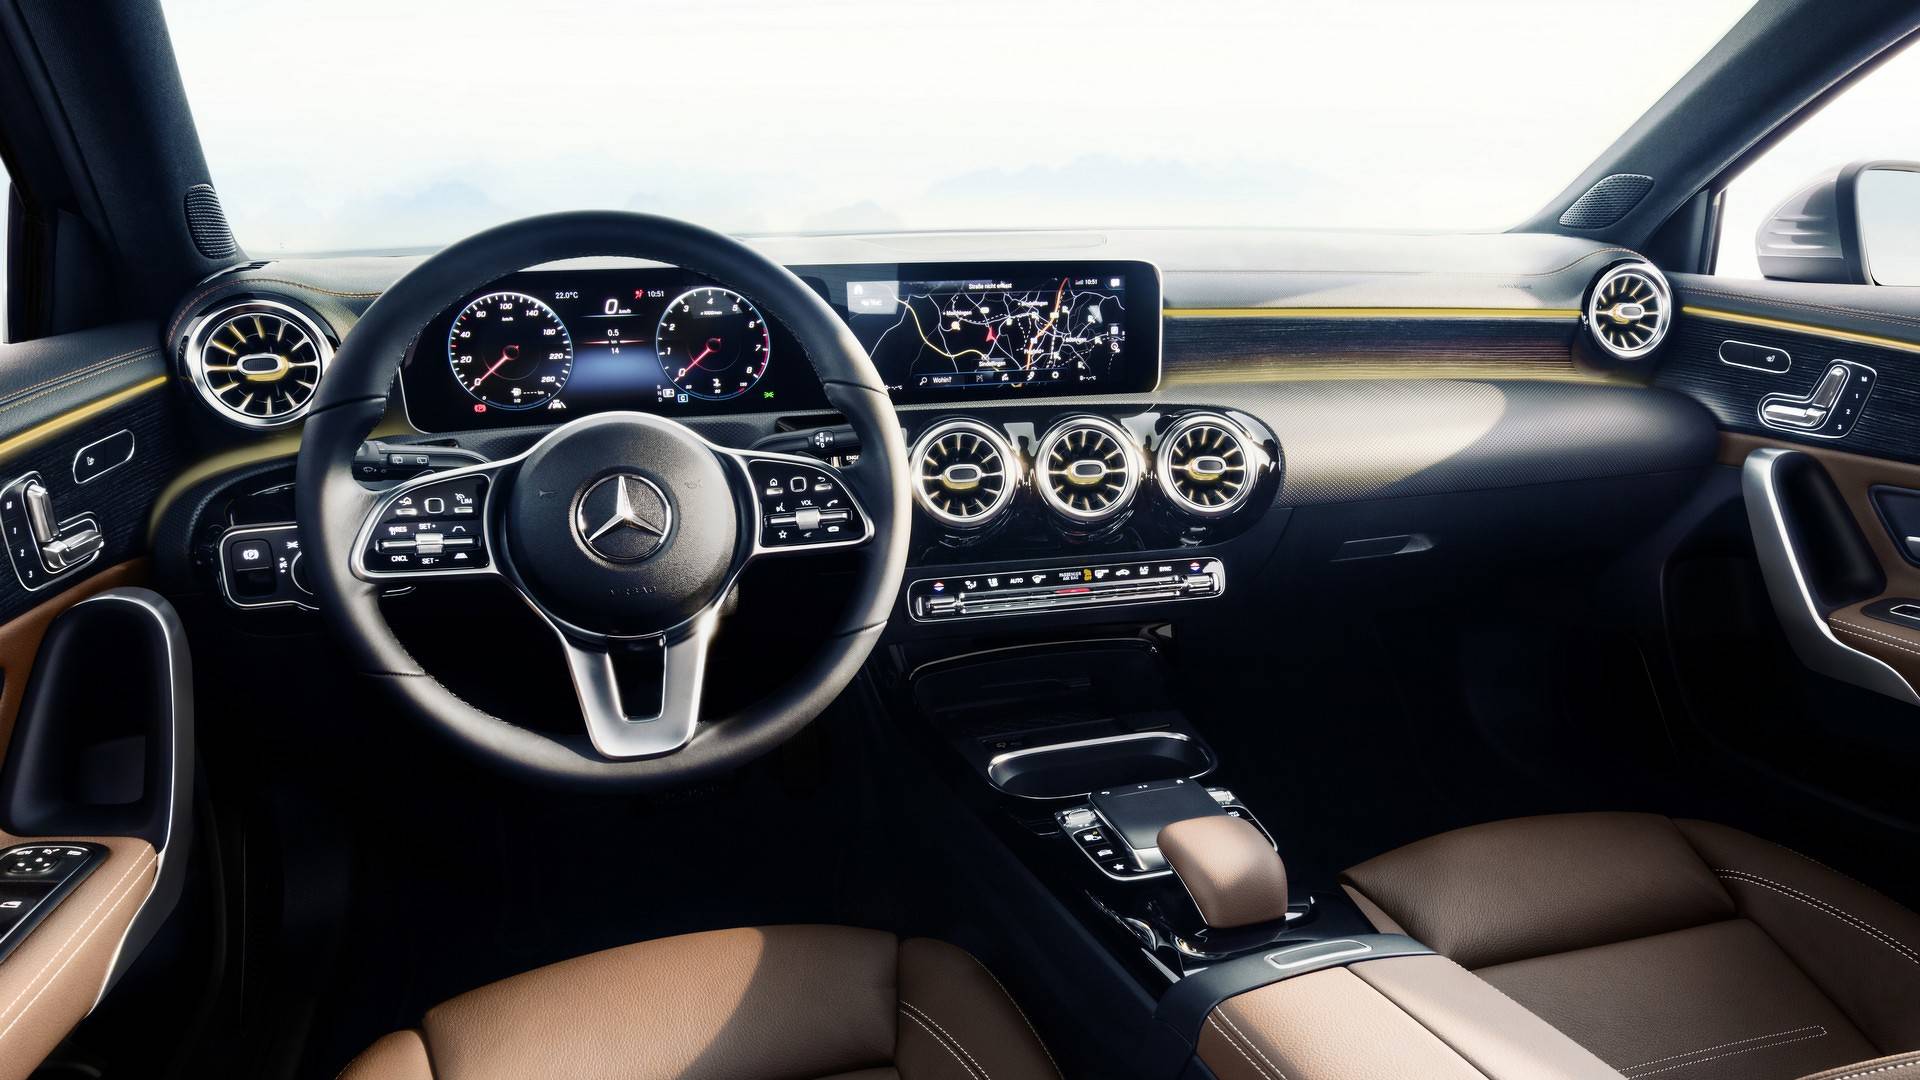 Classy 2018 Mercedes-Benz A-Class interior revealed